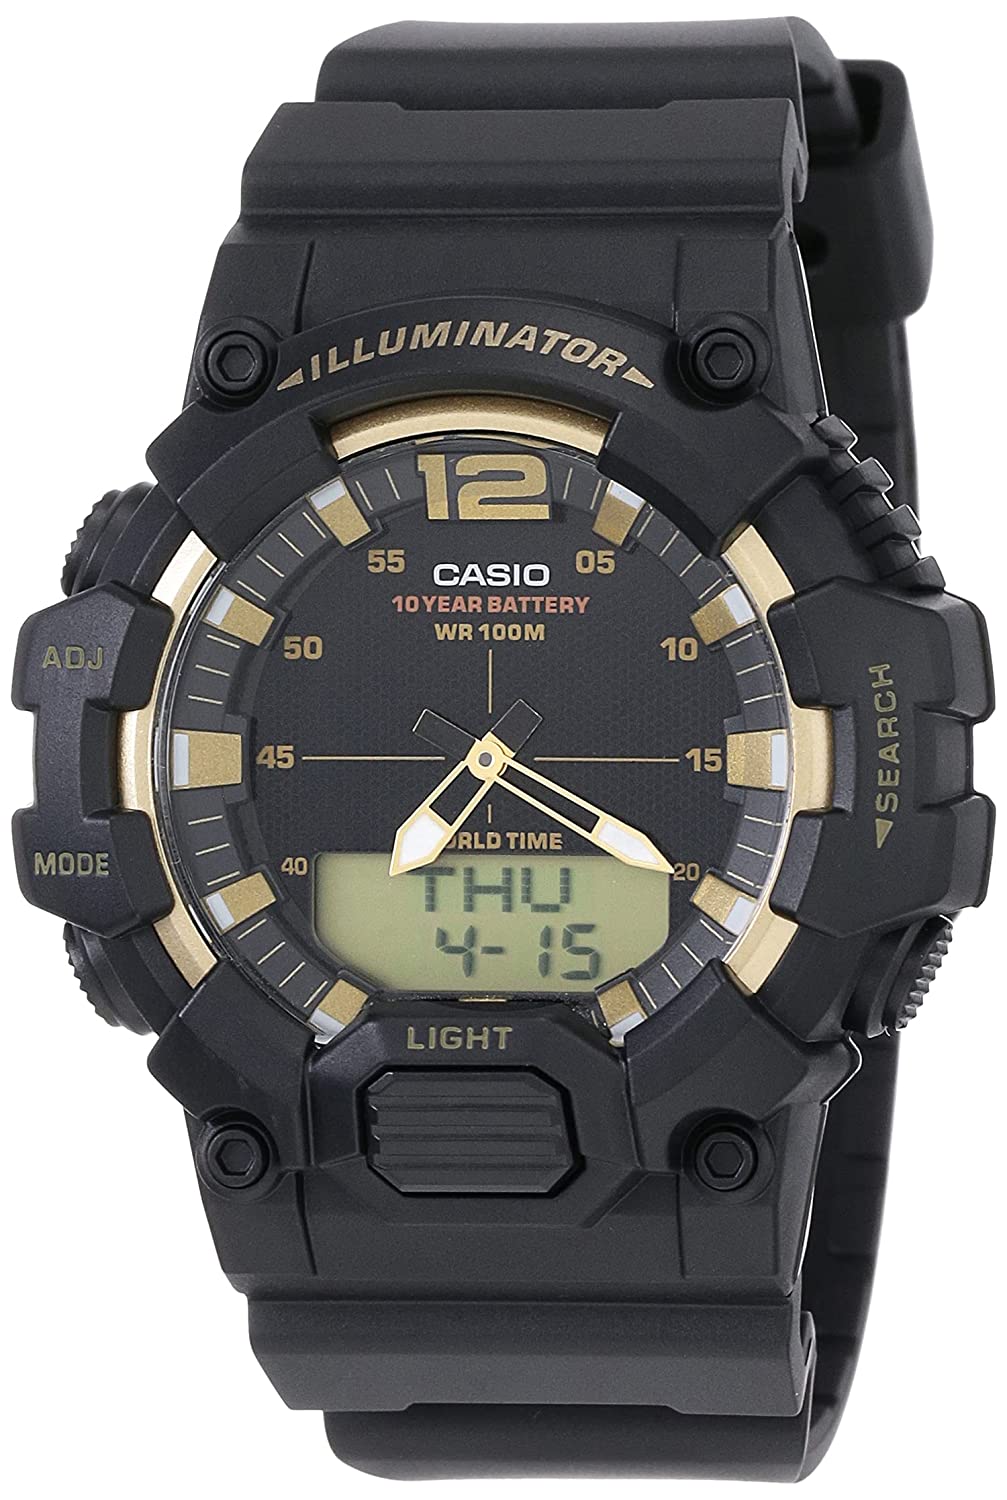 Casio Youth HDC 700 9AVDF D156 Black Digital Men's Watch